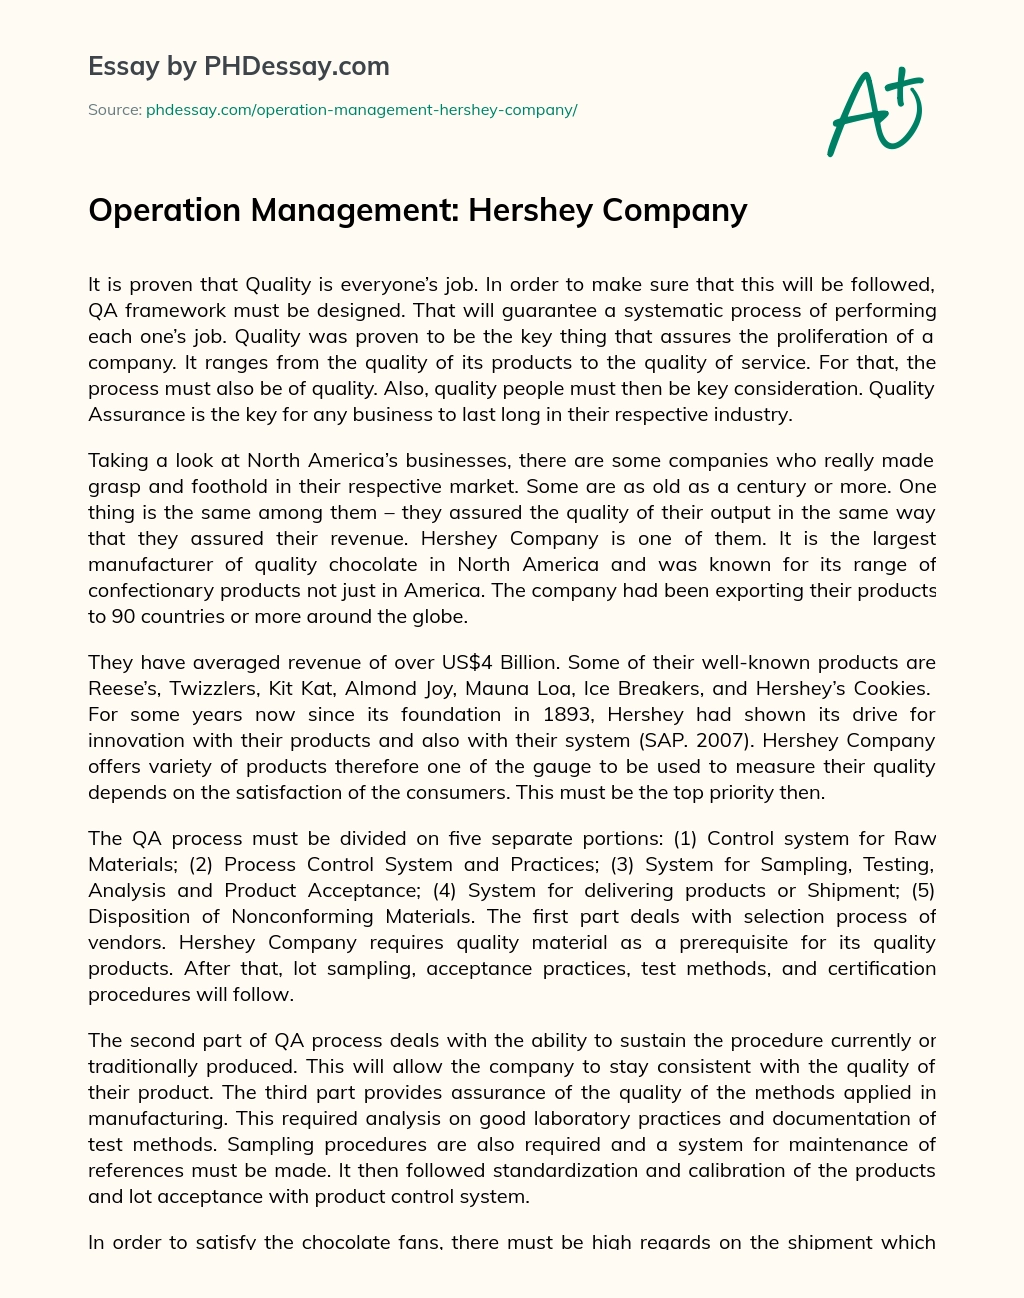 Operation Management: Hershey Company essay